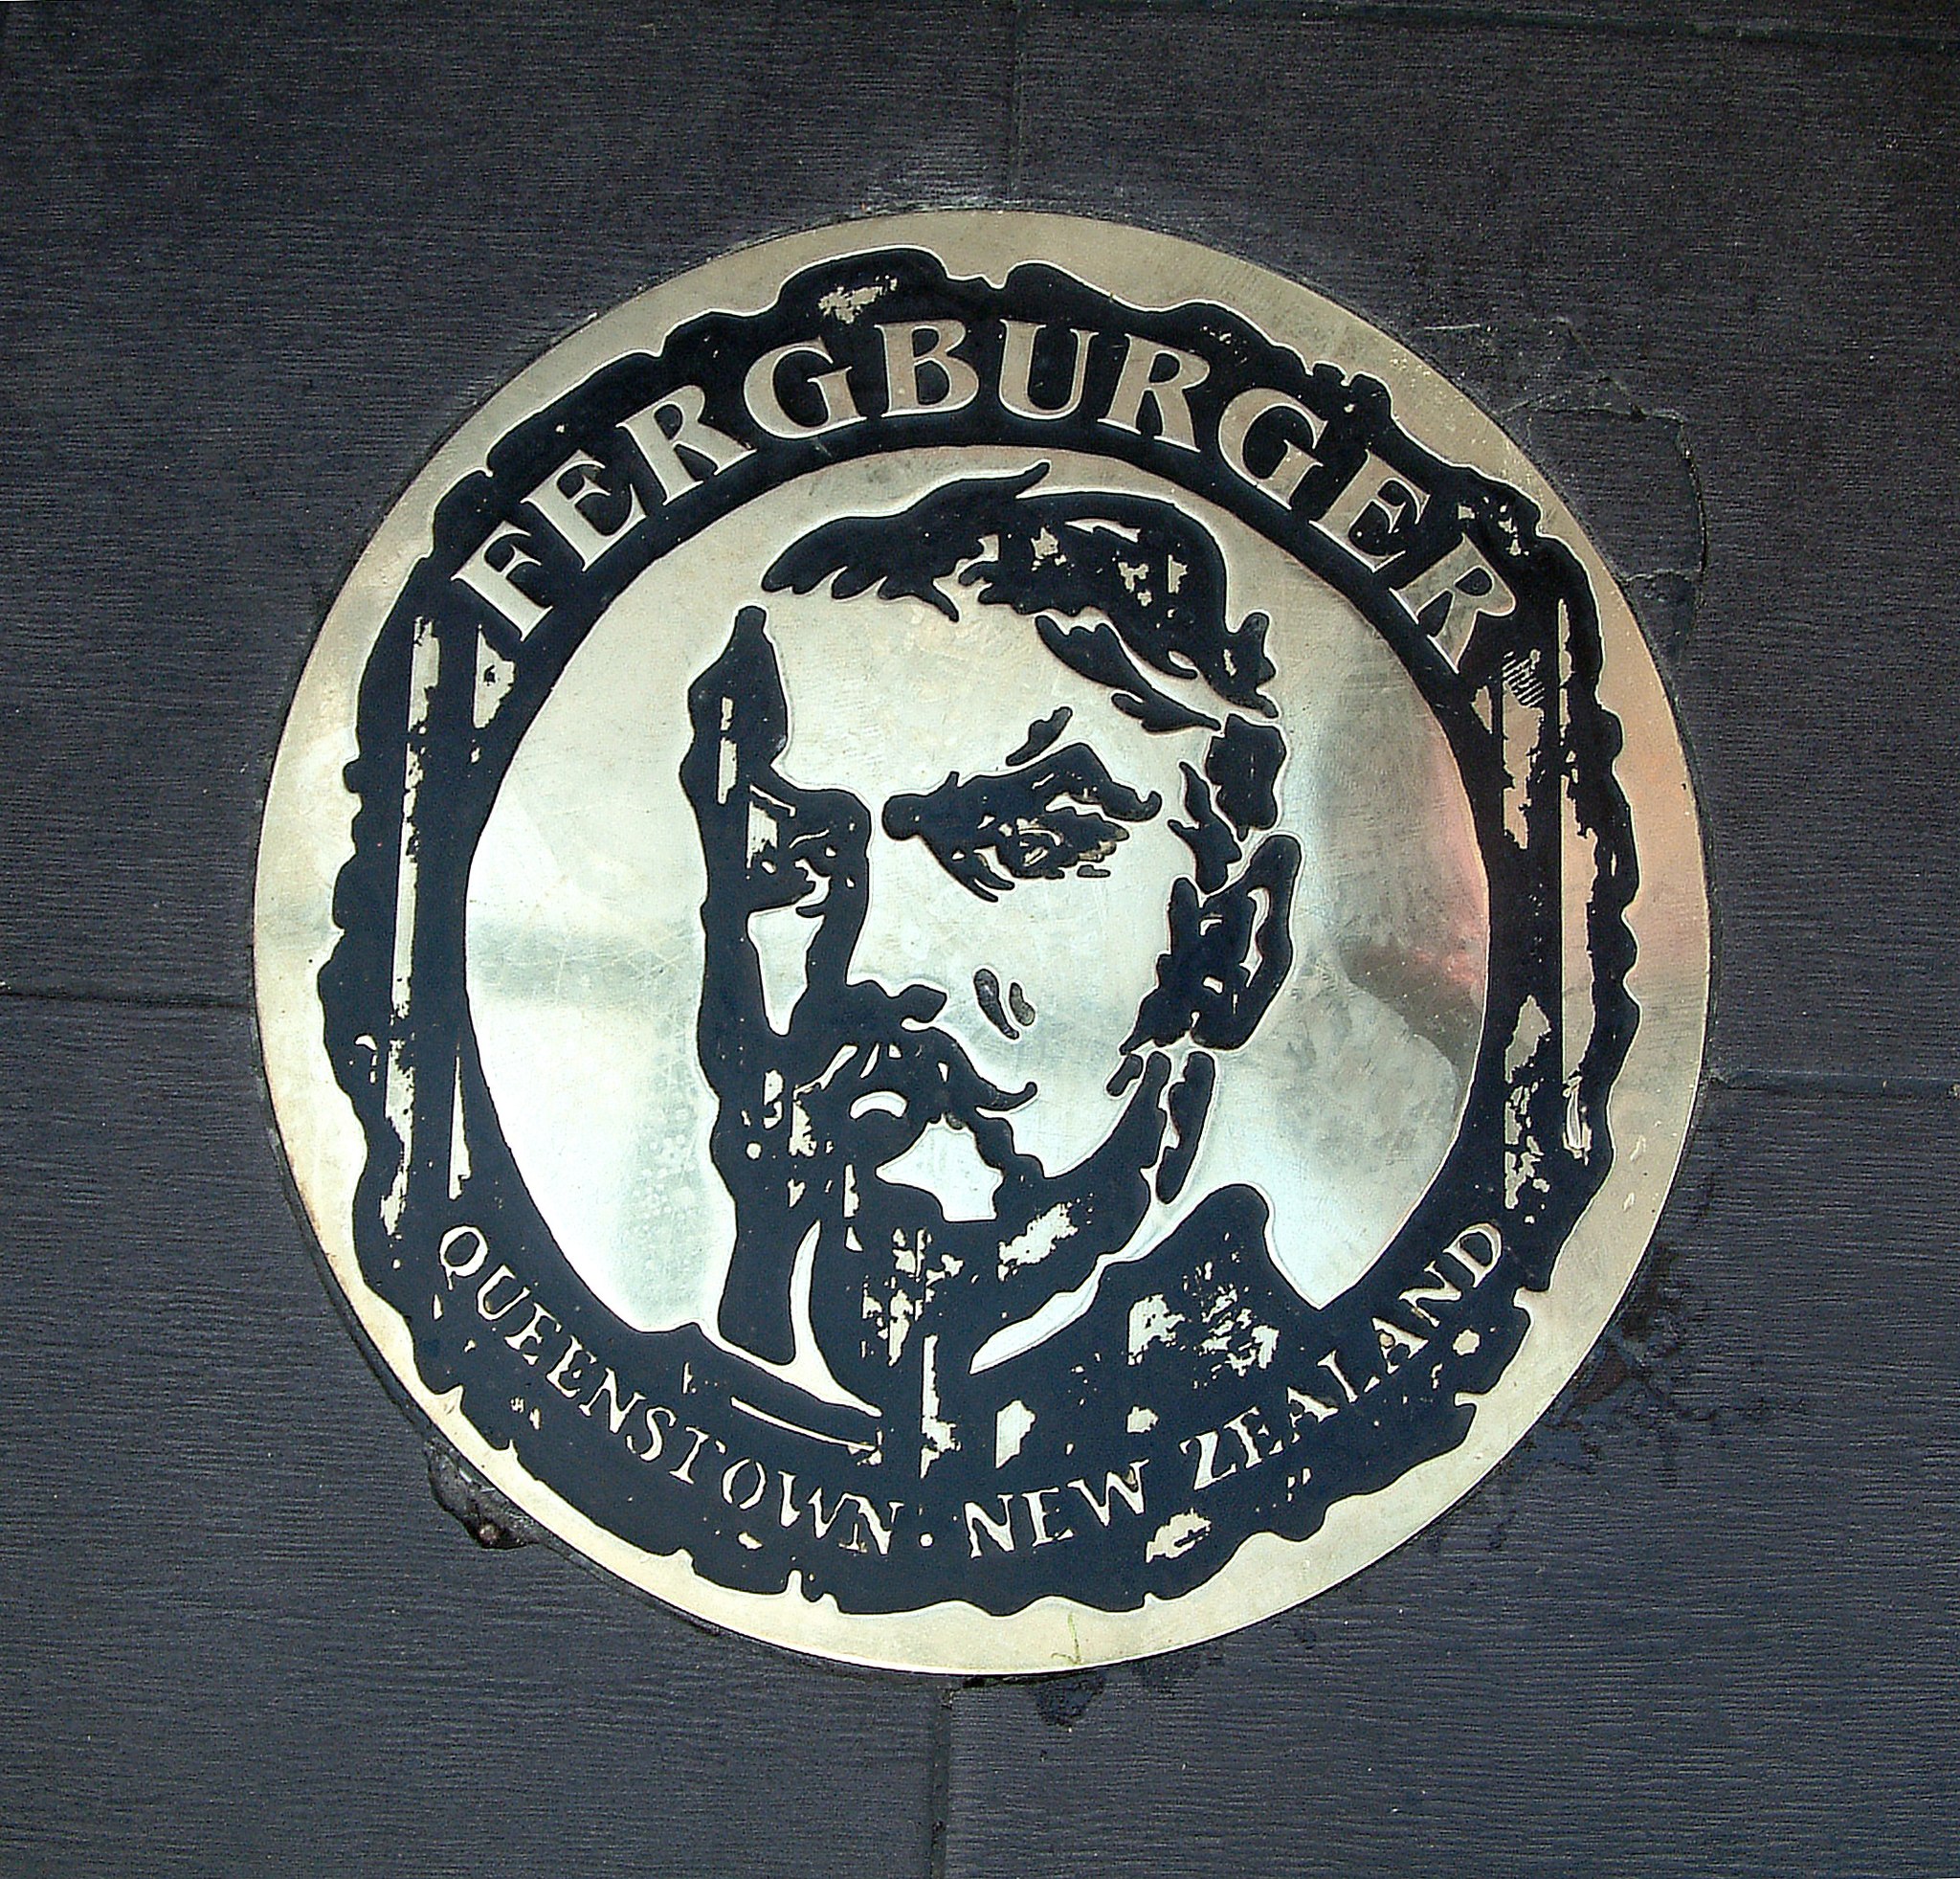 Fergburger New Zealand